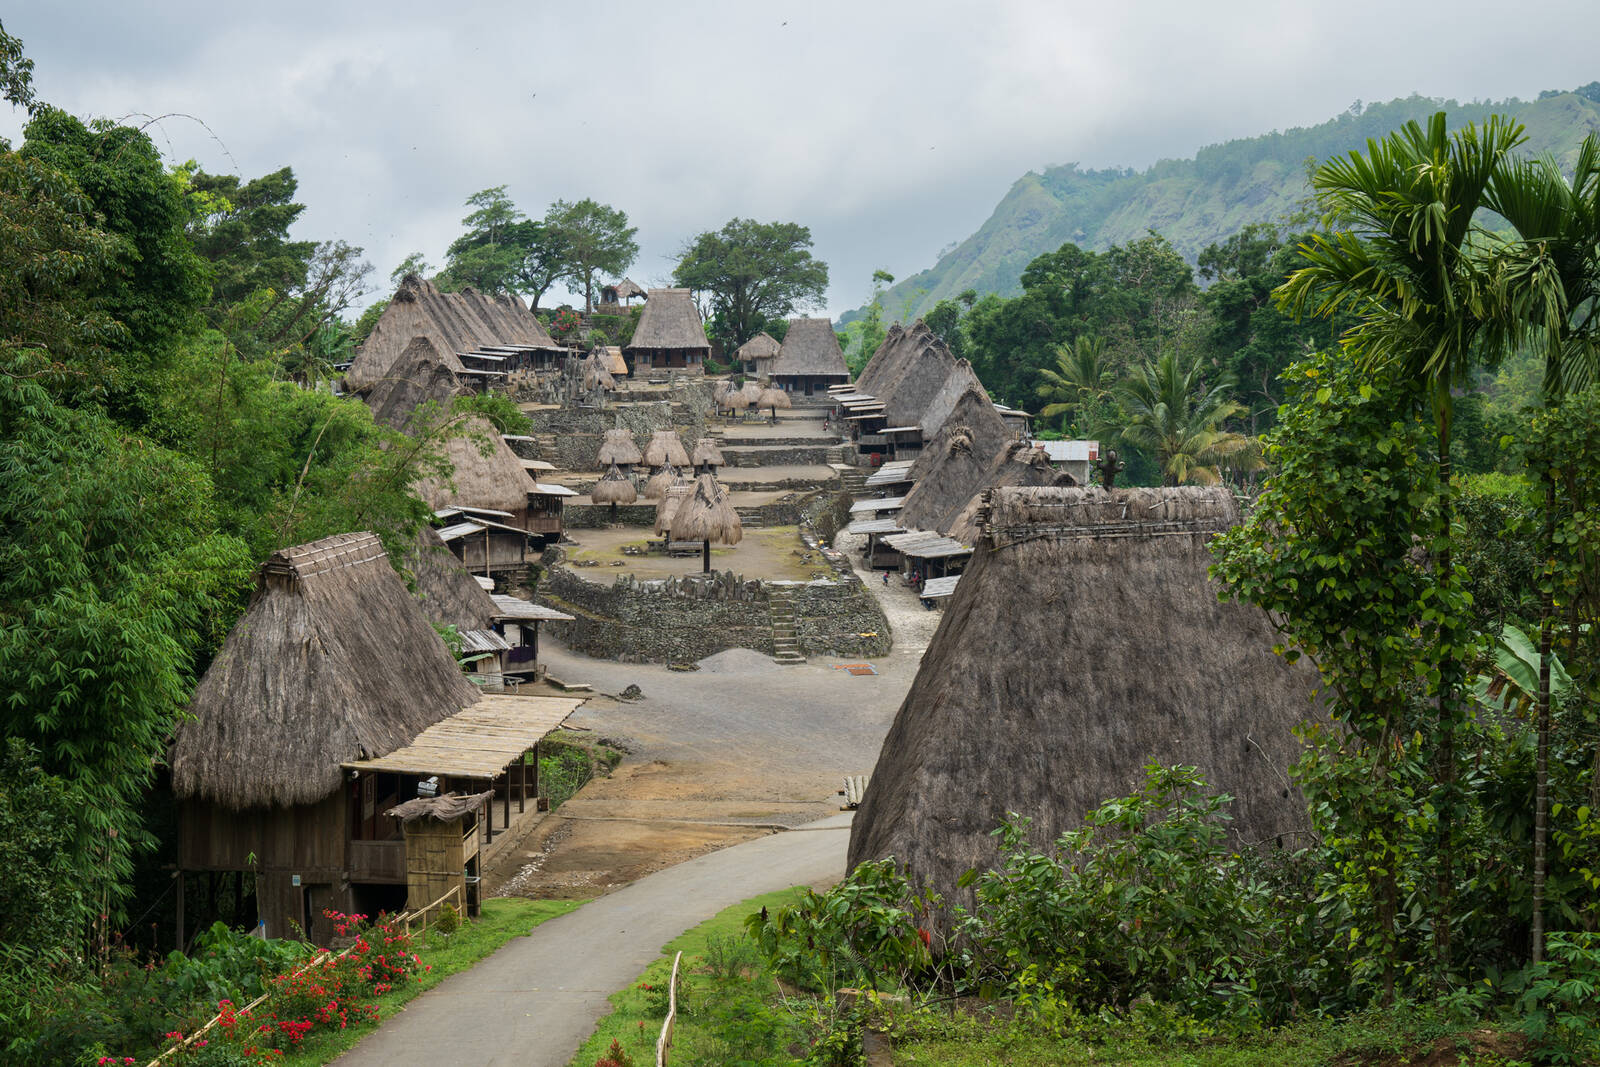 Image of Bena Traditional Village by Luka Esenko